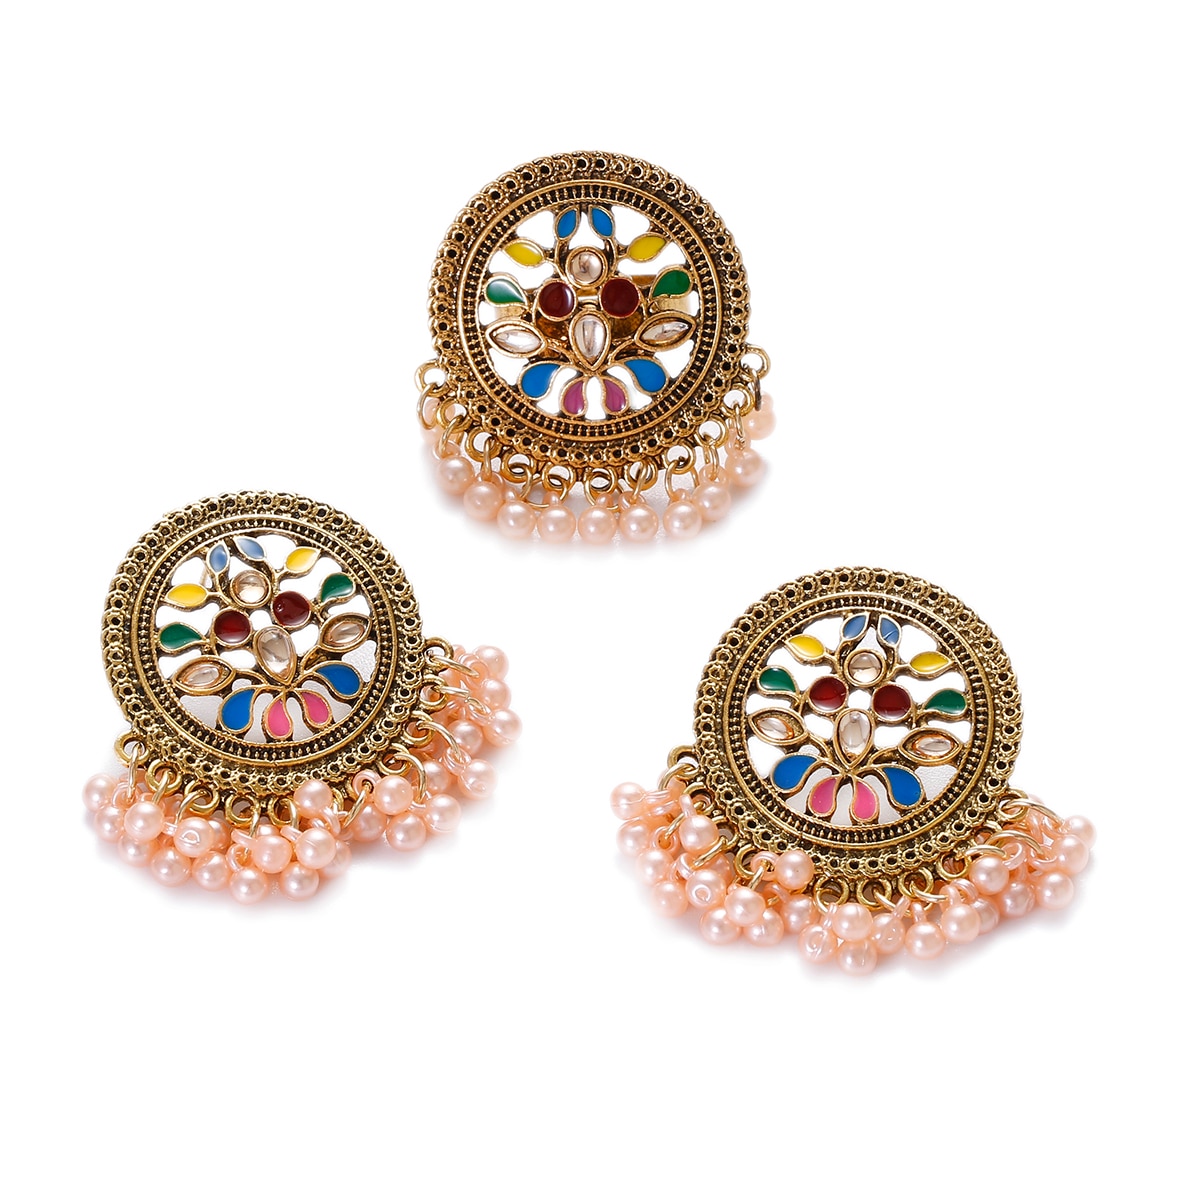 Classic-Round-Flower-India-EarringRing-Set-Women39s-Wedding-Jewelry-Hangers-Pearl-Beads-Jhumka-Earri-3256804205740657-4